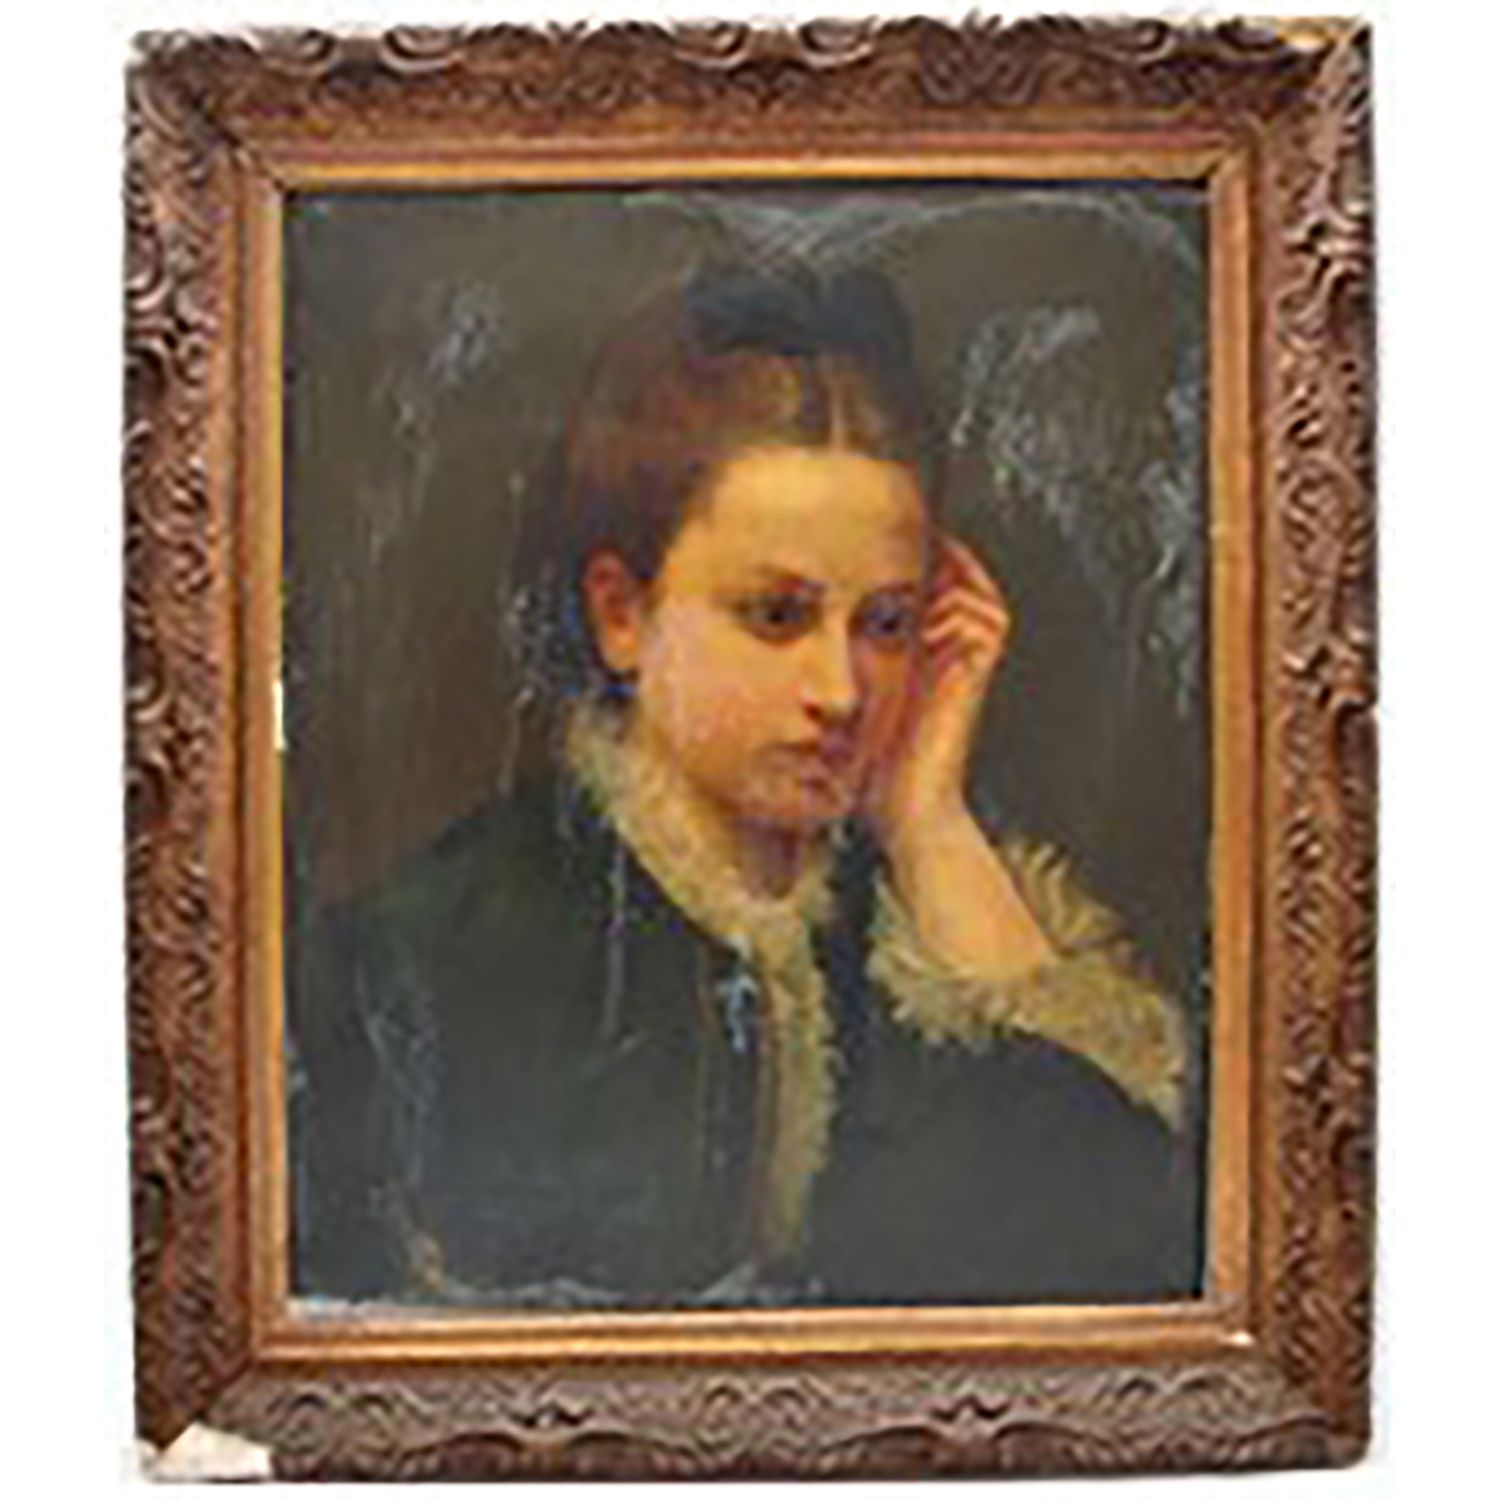 Null 戴黑蝴蝶结的年轻女子画像

布面油画

19世纪晚期。带框架

事故和车架的小损伤。

布面油画，十九世纪末，带框

意外事故和框架上的缺失